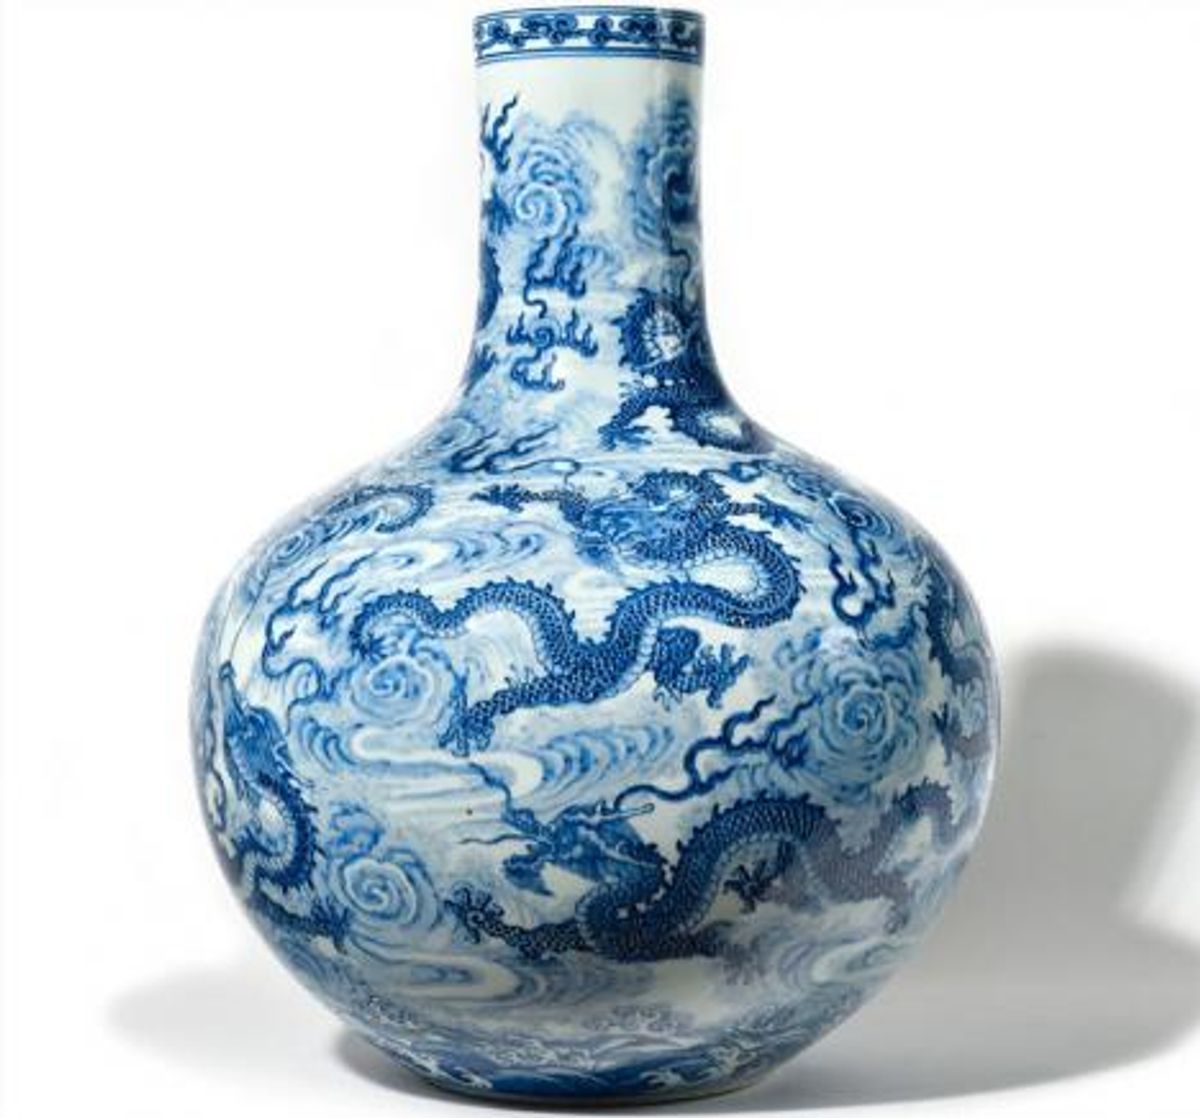 Grand vase Tianqiuping, Chine, porcelaine, 54 x 40 cm.© Osenat